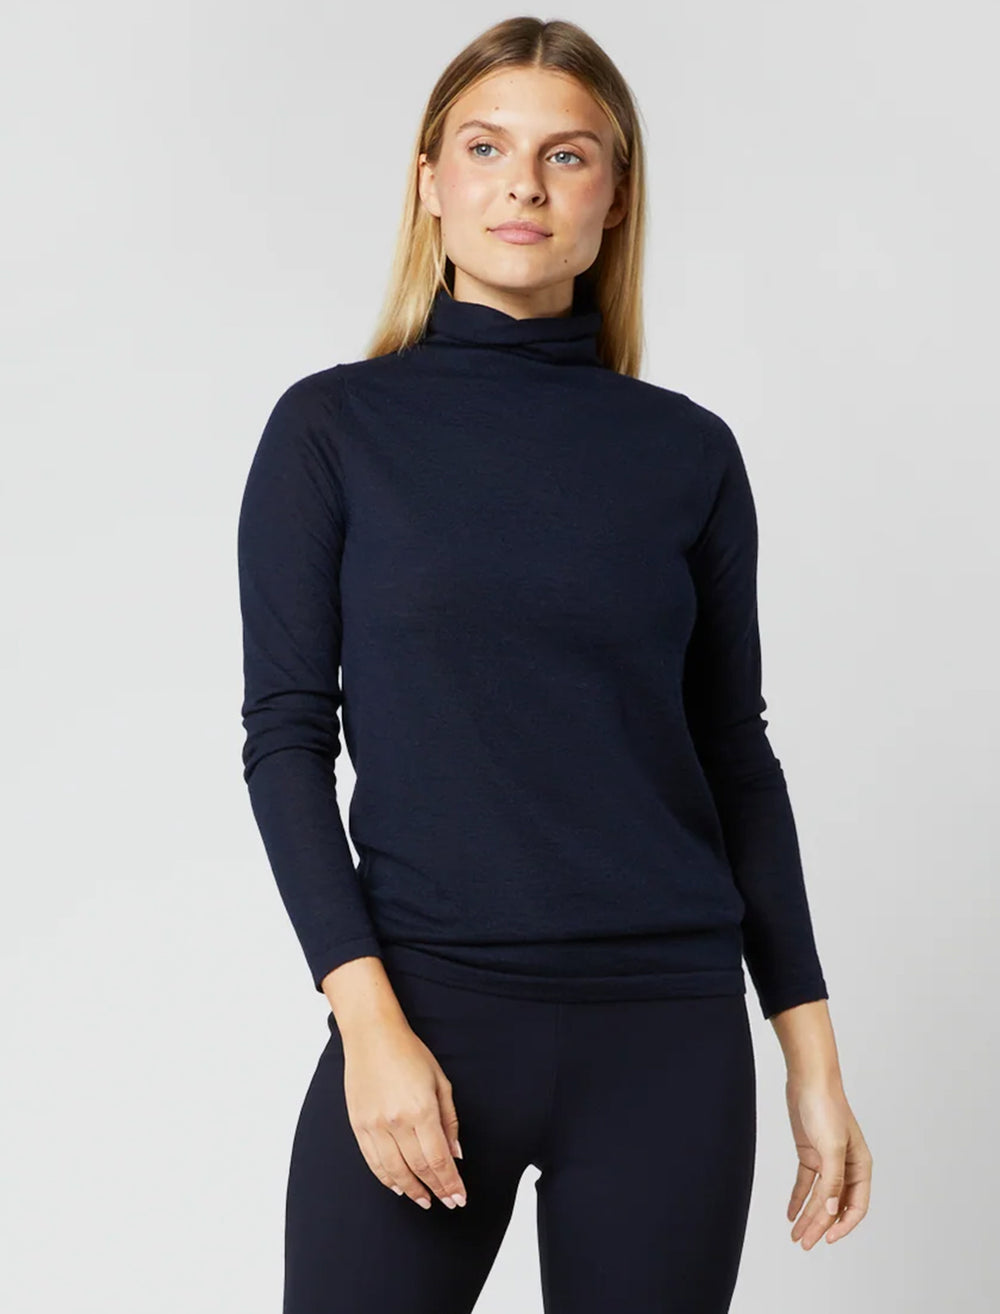 Model wearing Ann Mashburn's funnel neck cashmere sweater in navy.